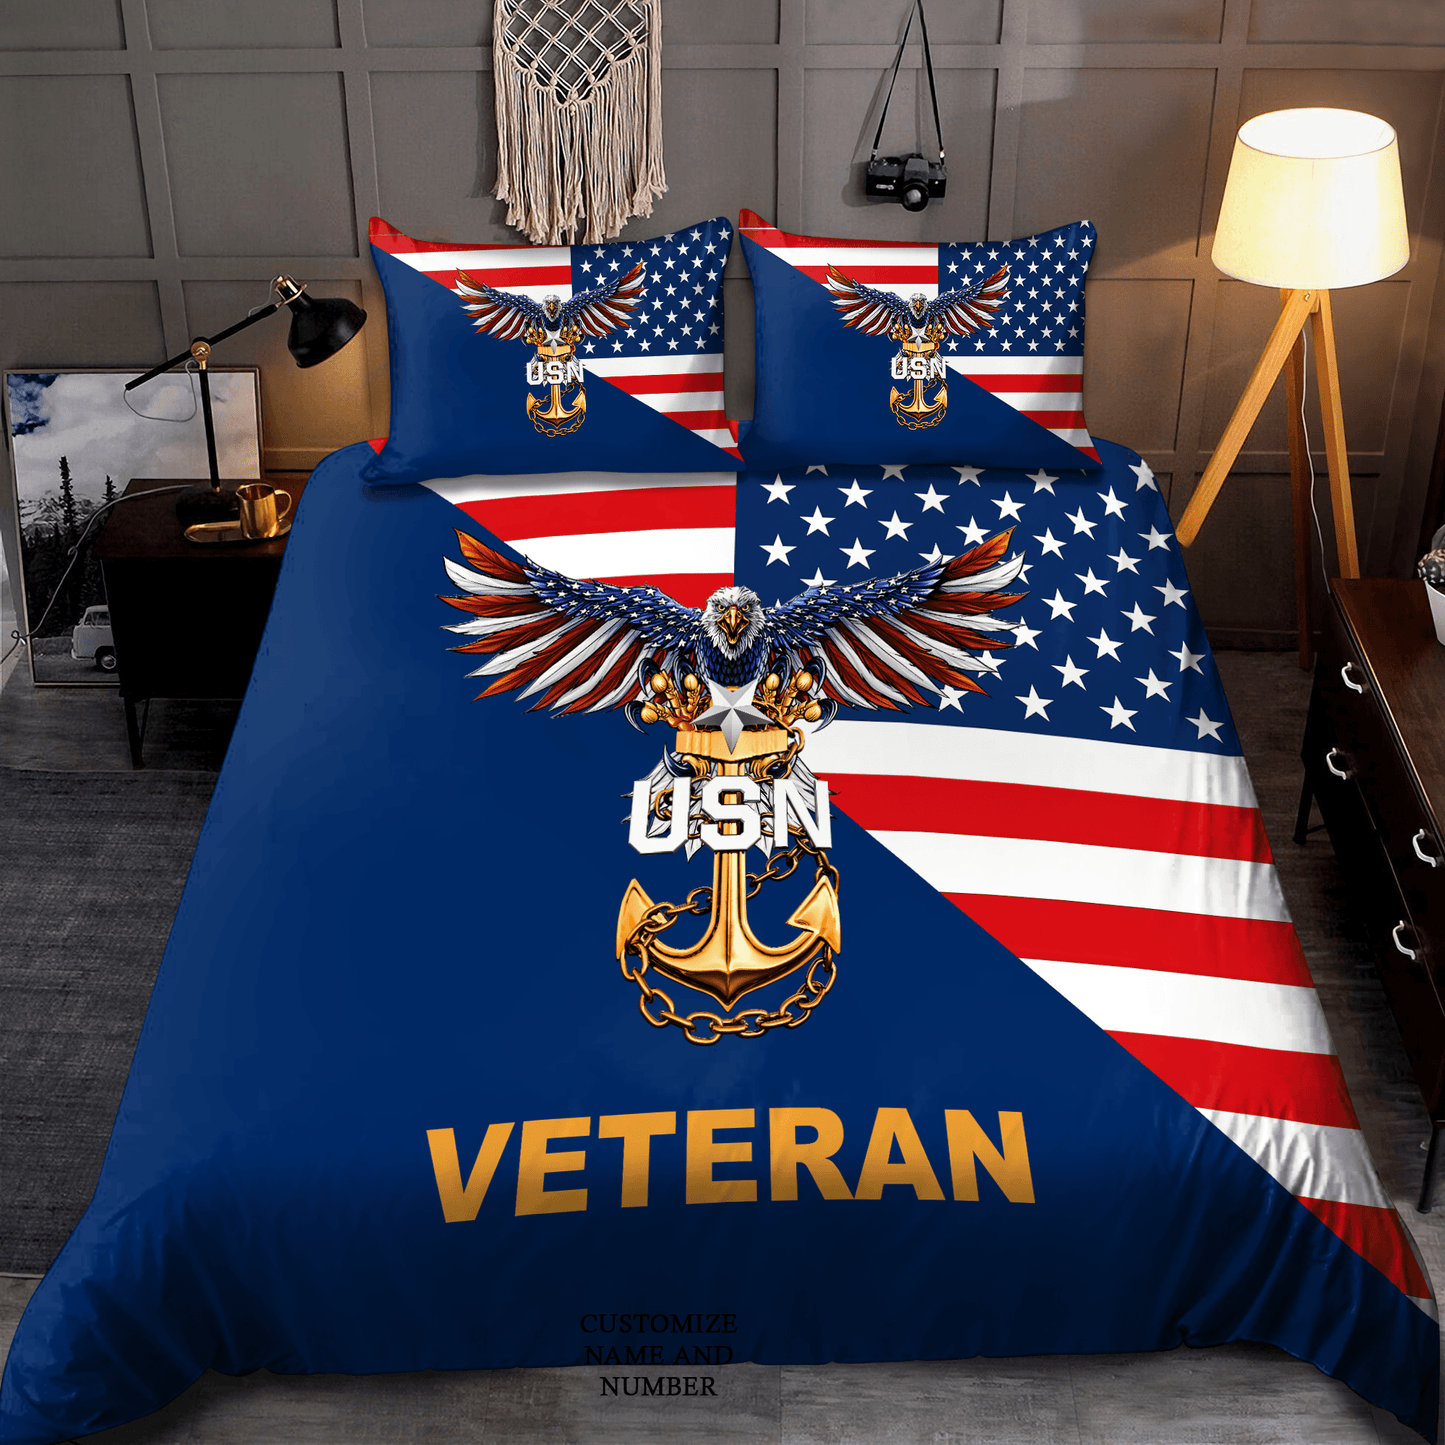 Veteran Bedding Set USN Veteran Symbol American Flag Duvet Covers Blue Unique Gift